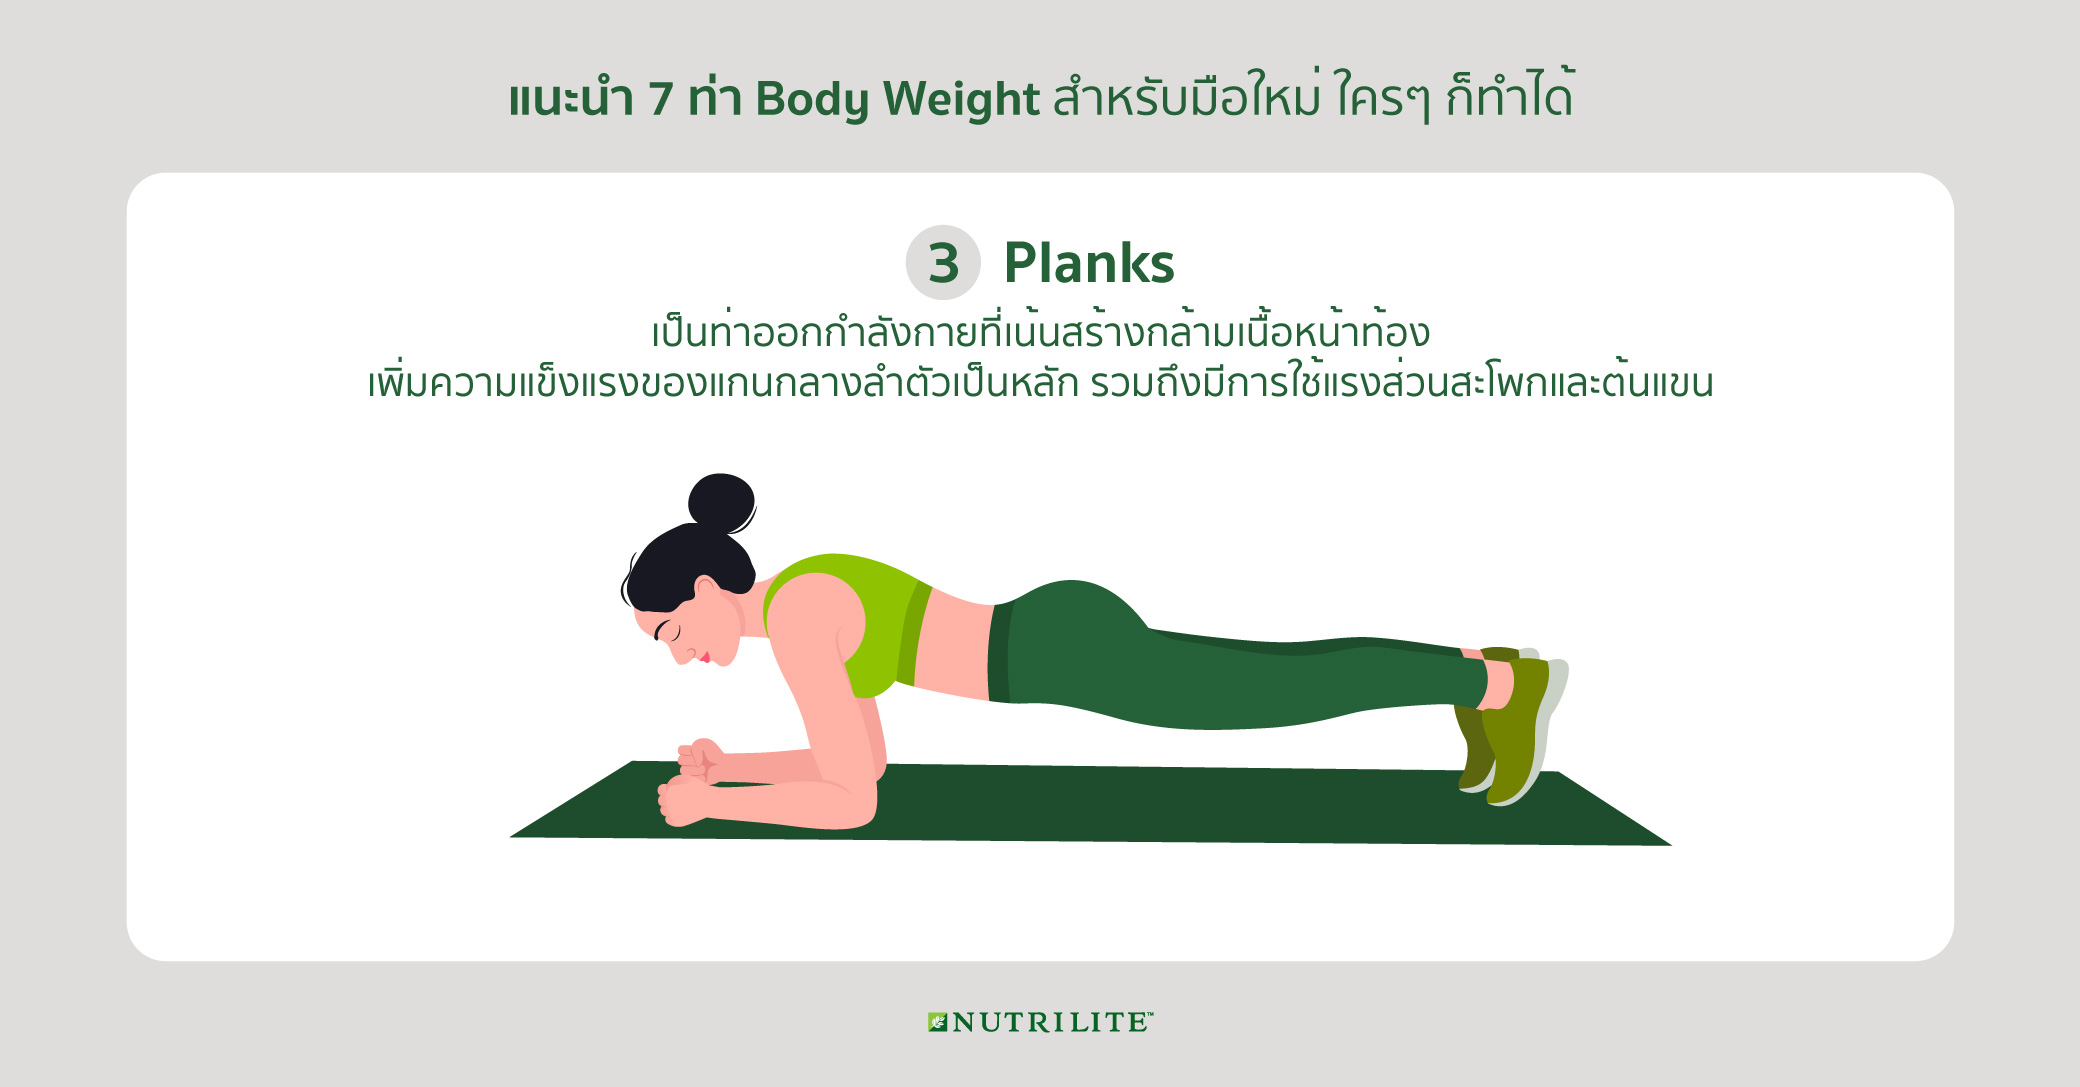 Body Weight คืออะไร พร้อมแนะ 7 วิธีสร้างกล้ามเนื้อแบบไม่พึ่งอุปกรณ์ |  Nutrilite™ Thailand